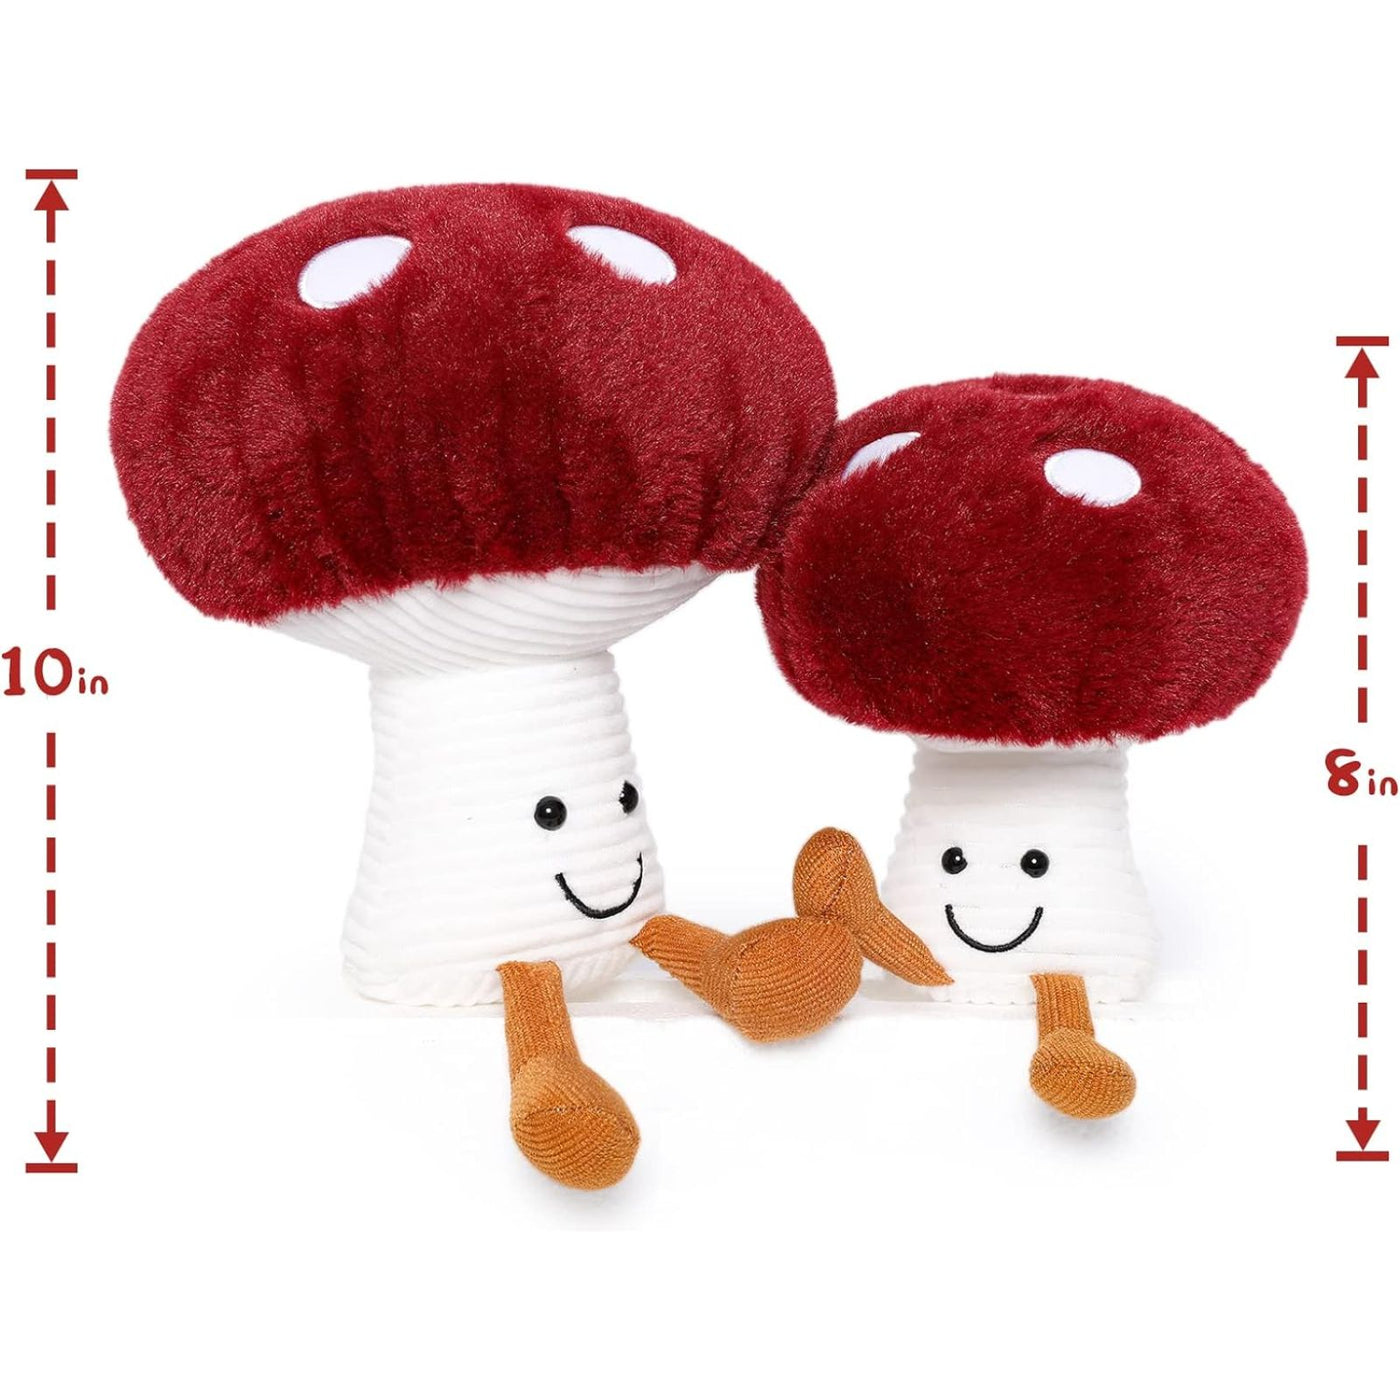 Mushroom Stuffed Toy, 10 Inches